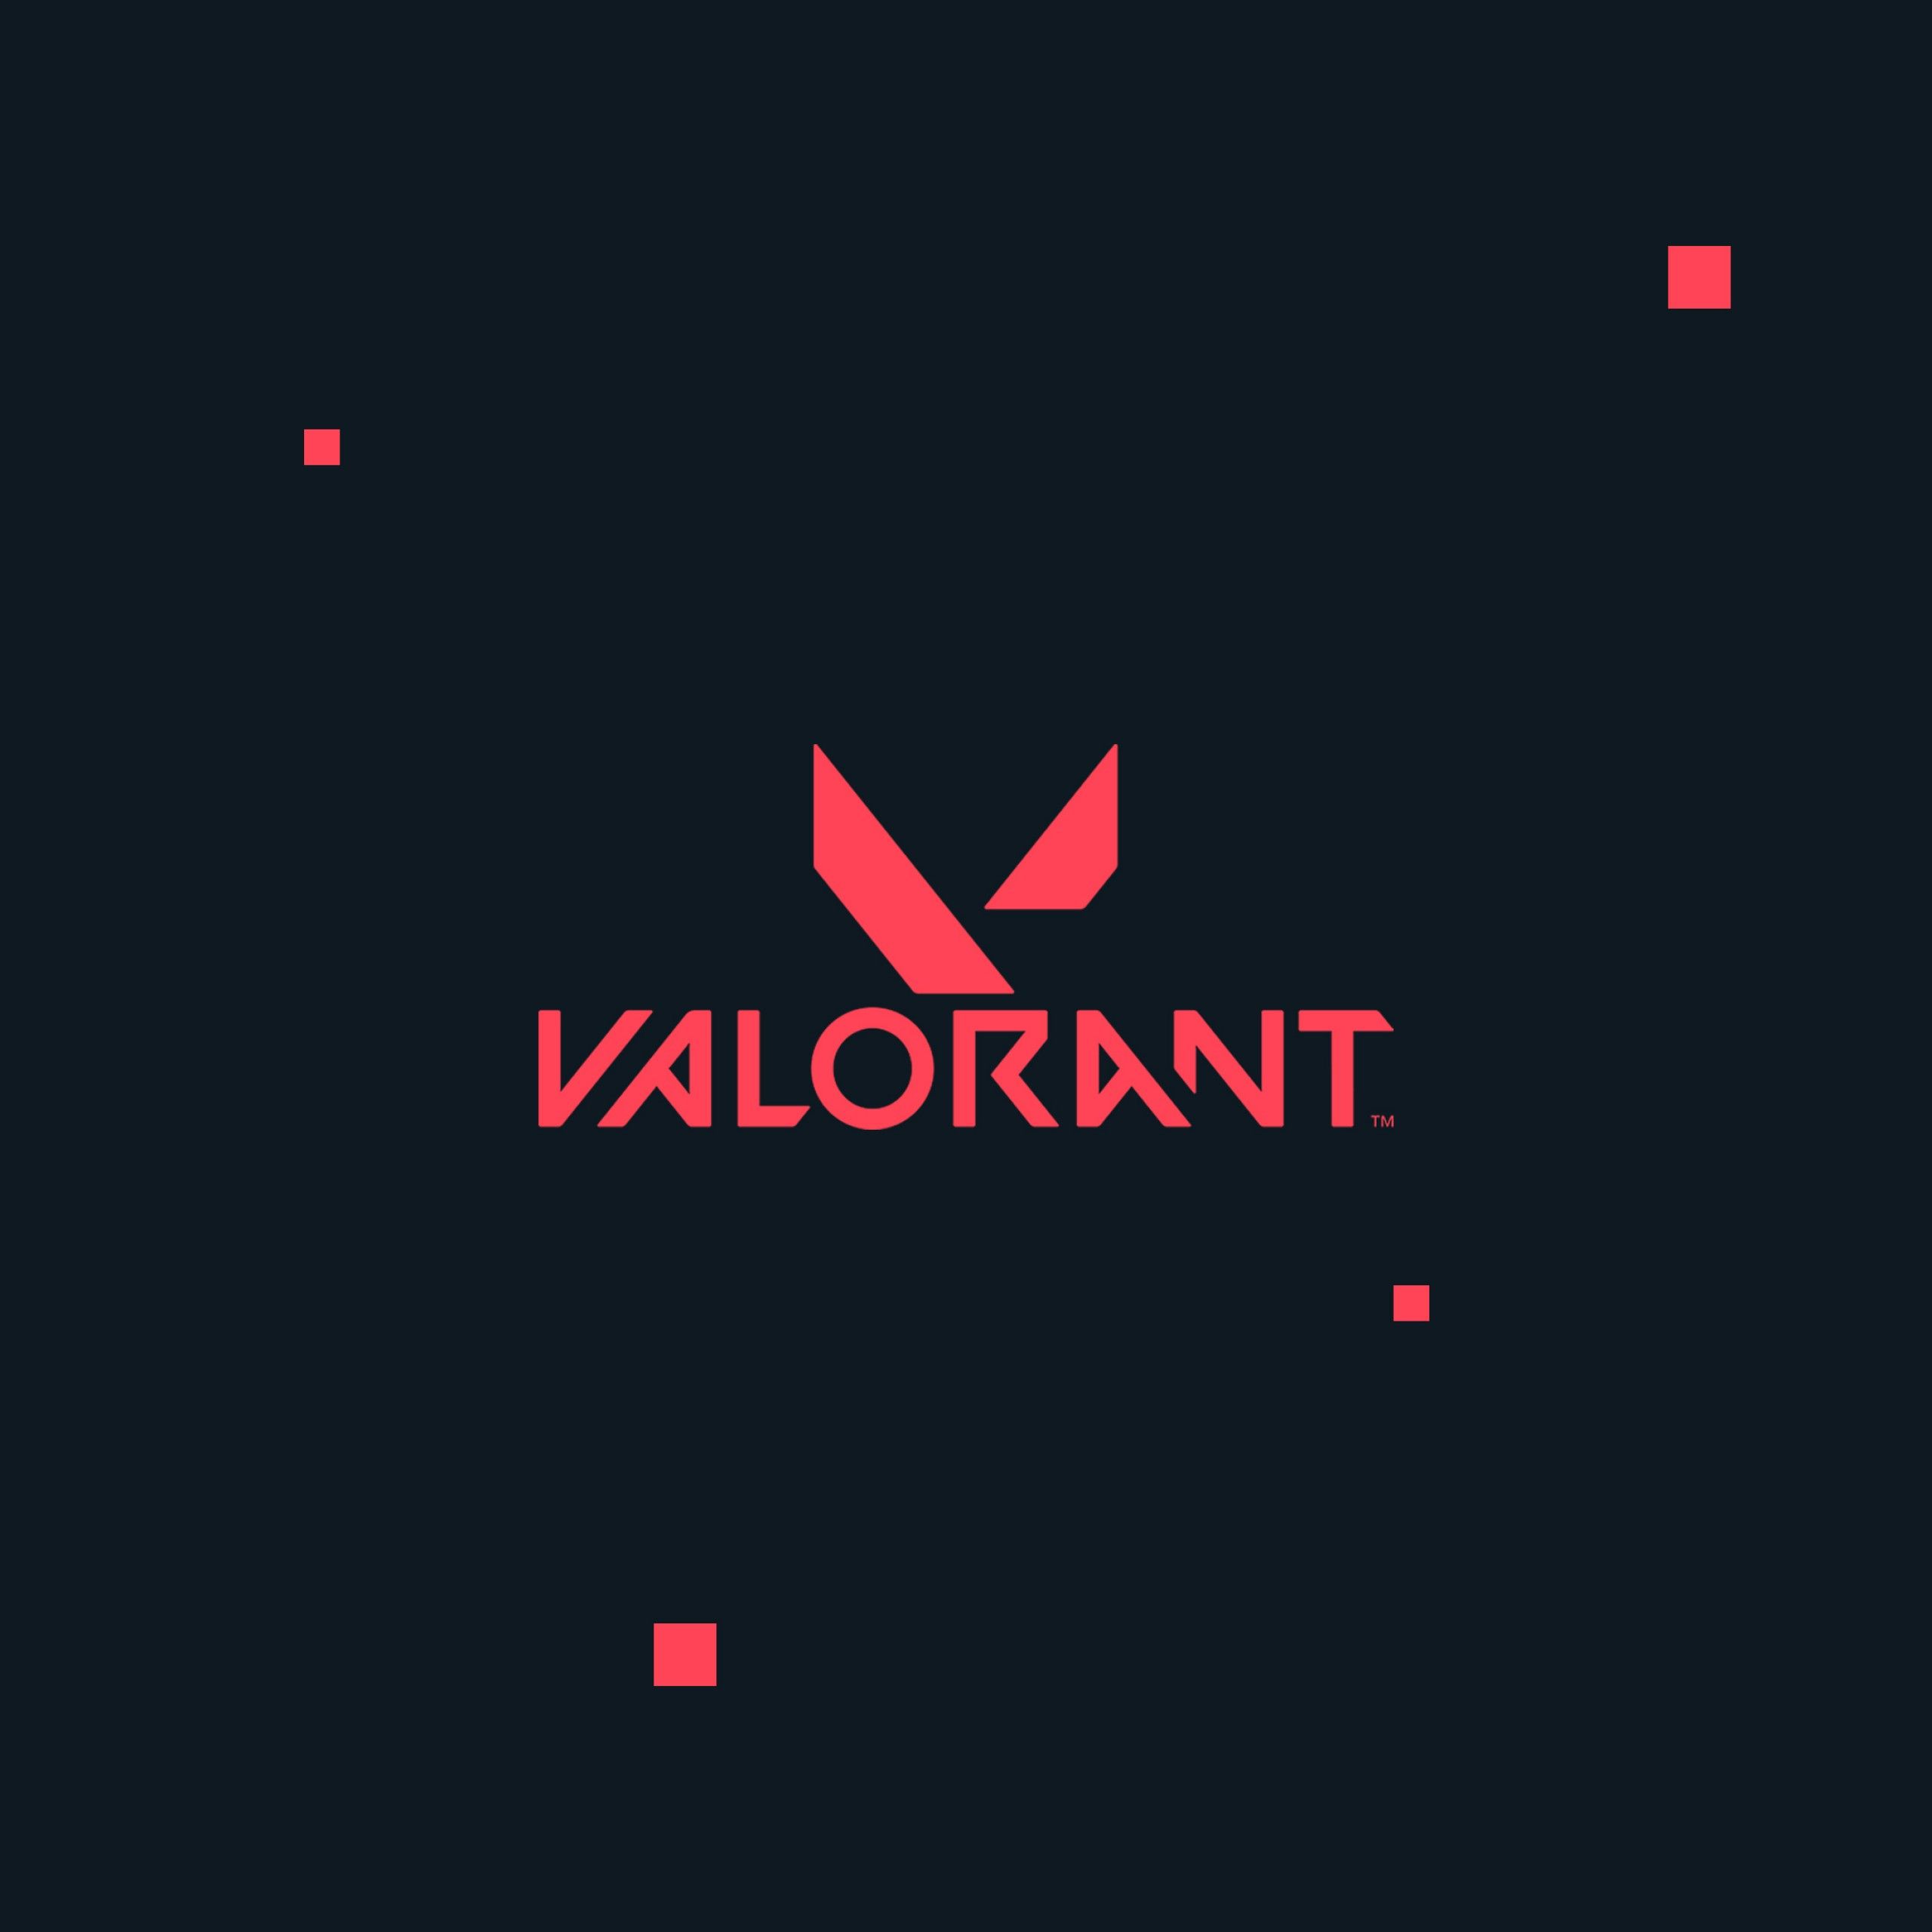 Valorant 4K Wallpaper, PC Games, 2020 Games, Black Dark